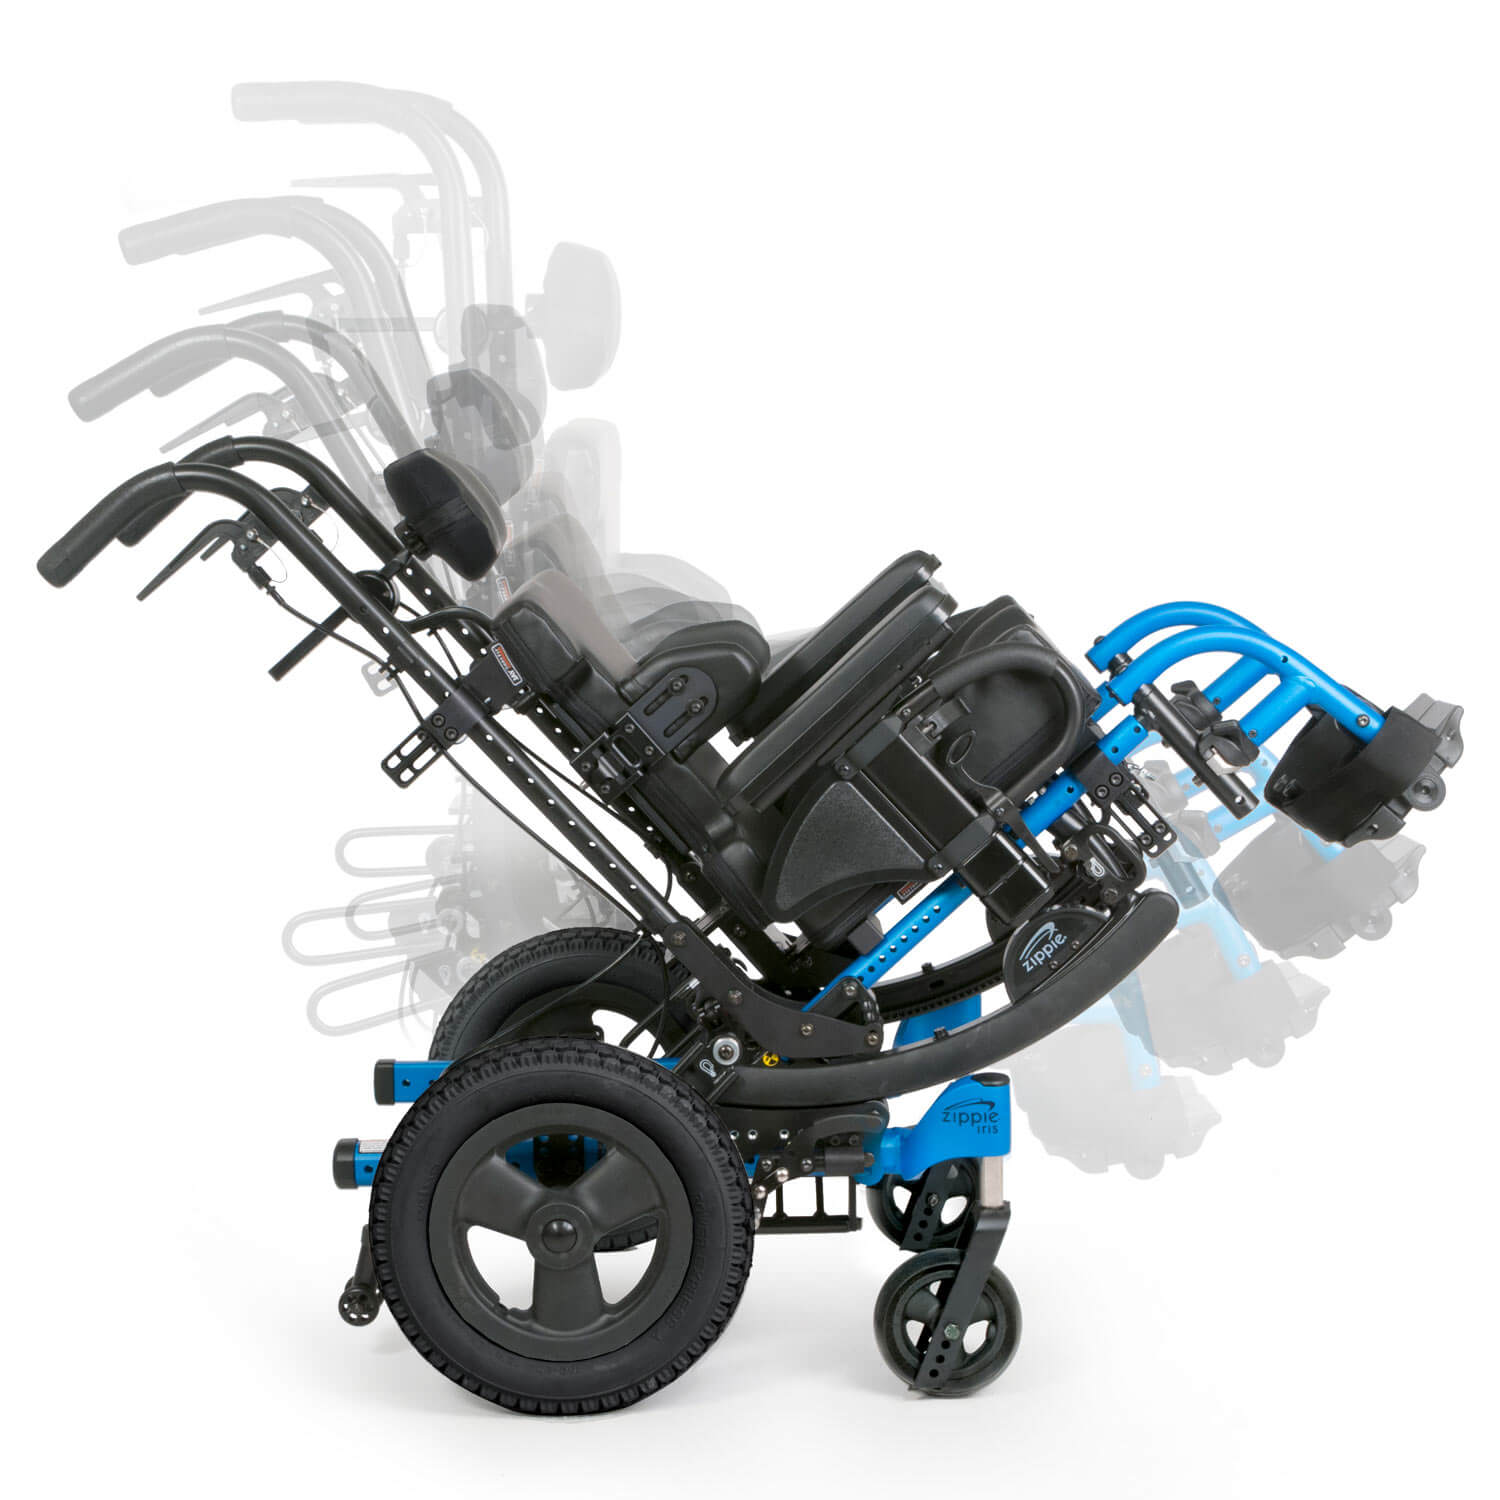 https://www.sunrisemedical.com/getattachment/manual-wheelchairs/Zippie/tilt-in-space-wheelchairs/IRIS/Product-Features/1-40-or-55-of-Intelligent-Rotation-in-Space-Tech/ZippieFoldingIRIS_composite.jpg.aspx?lang=en-US&width=1500&height=1500&ext=.jpg%}?width=960